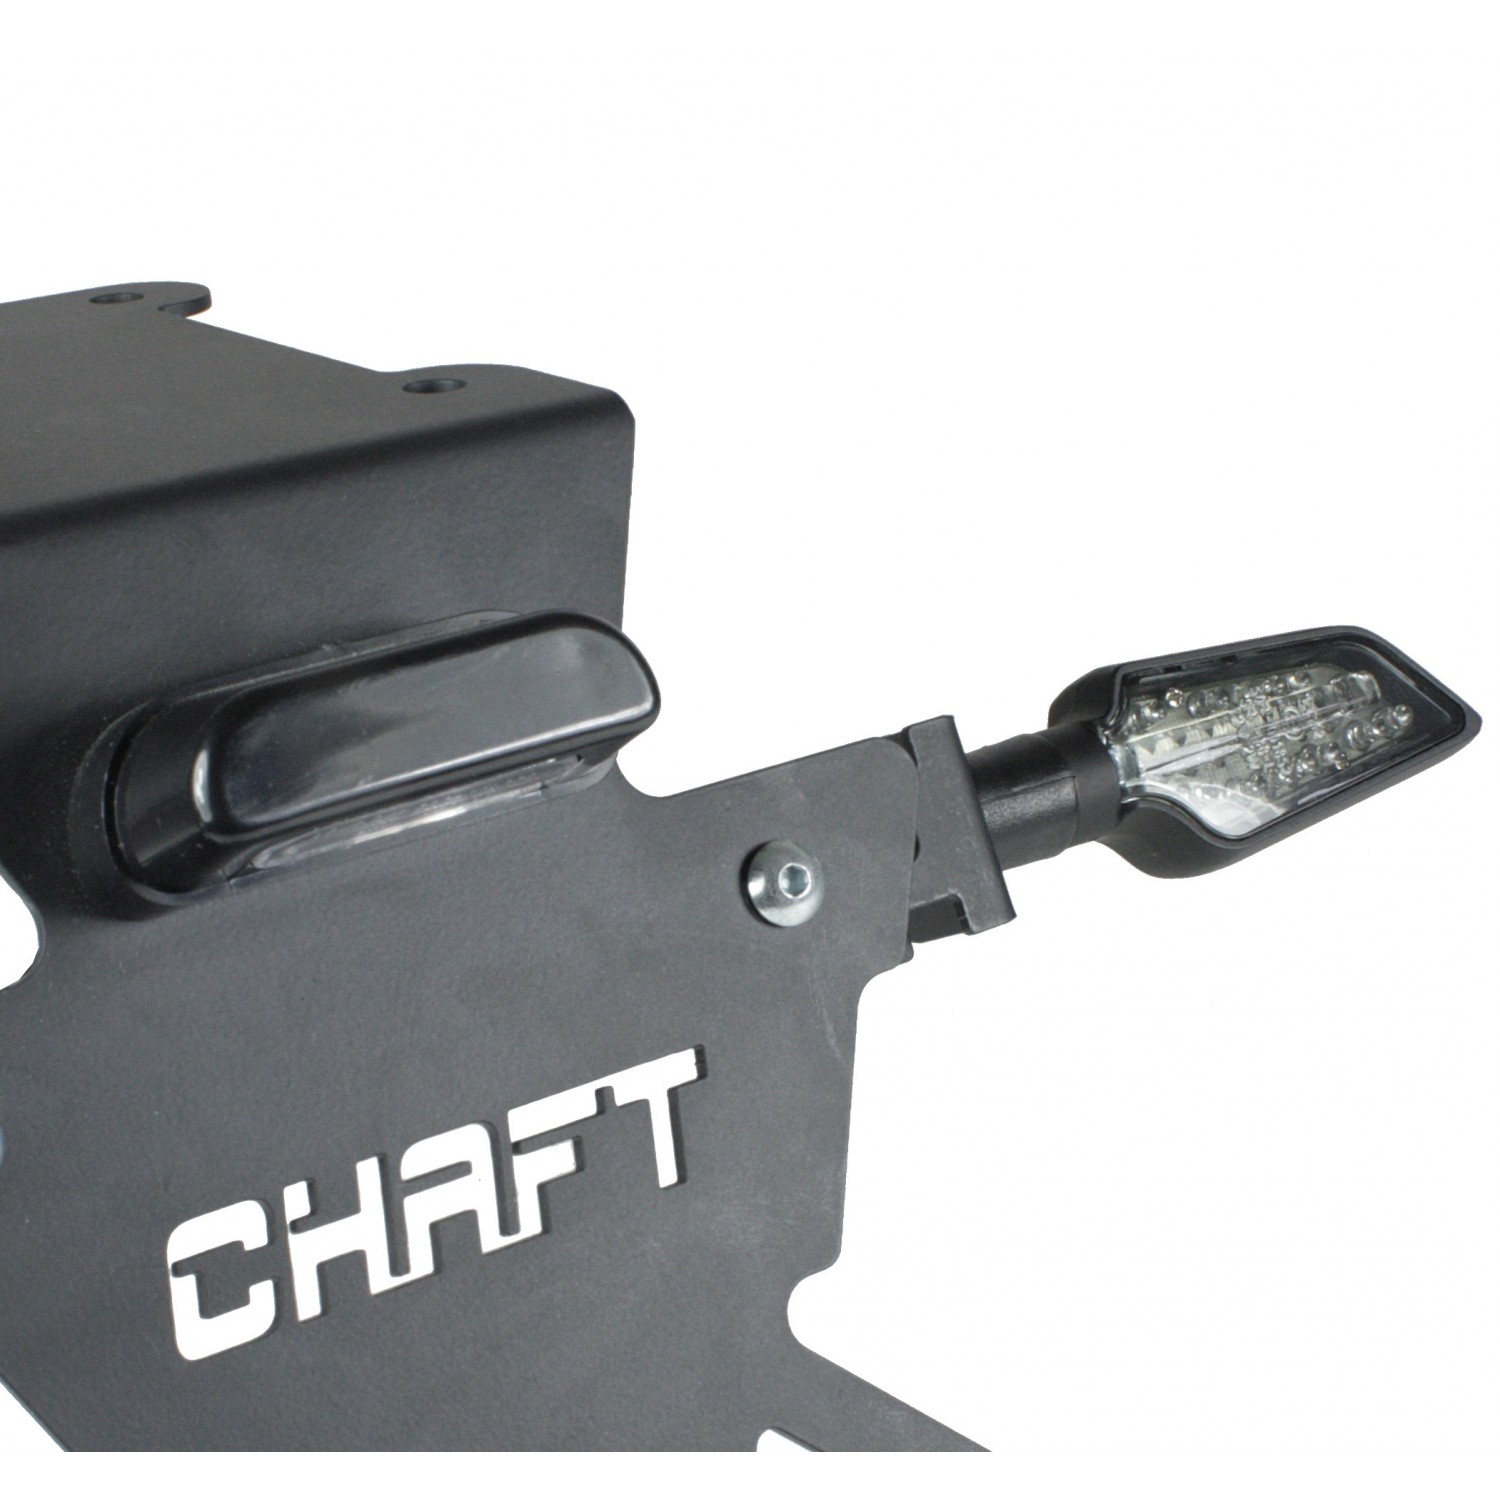 Clignotant Chaft Draft fumé, clignotant moto LED homologué